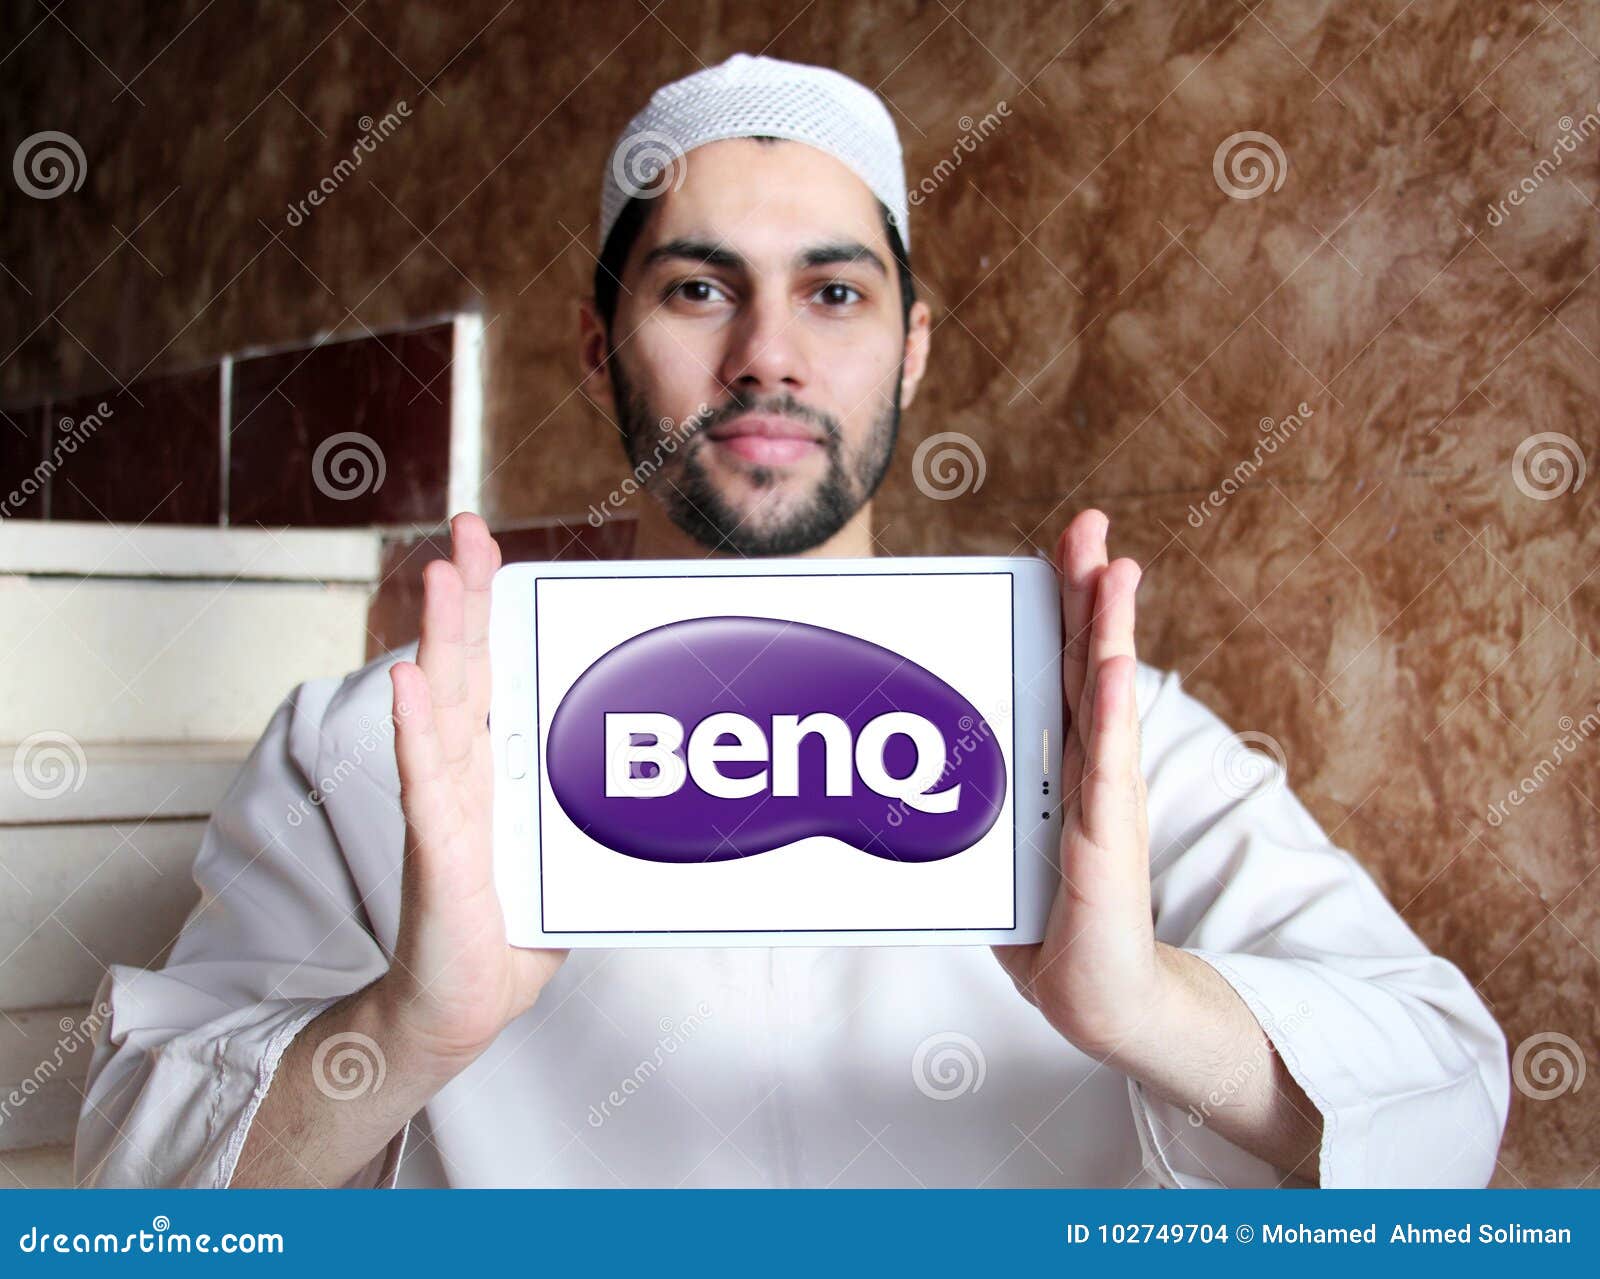 Benq logo, Vector Logo of Benq brand free download (eps, ai, png, cdr)  formats